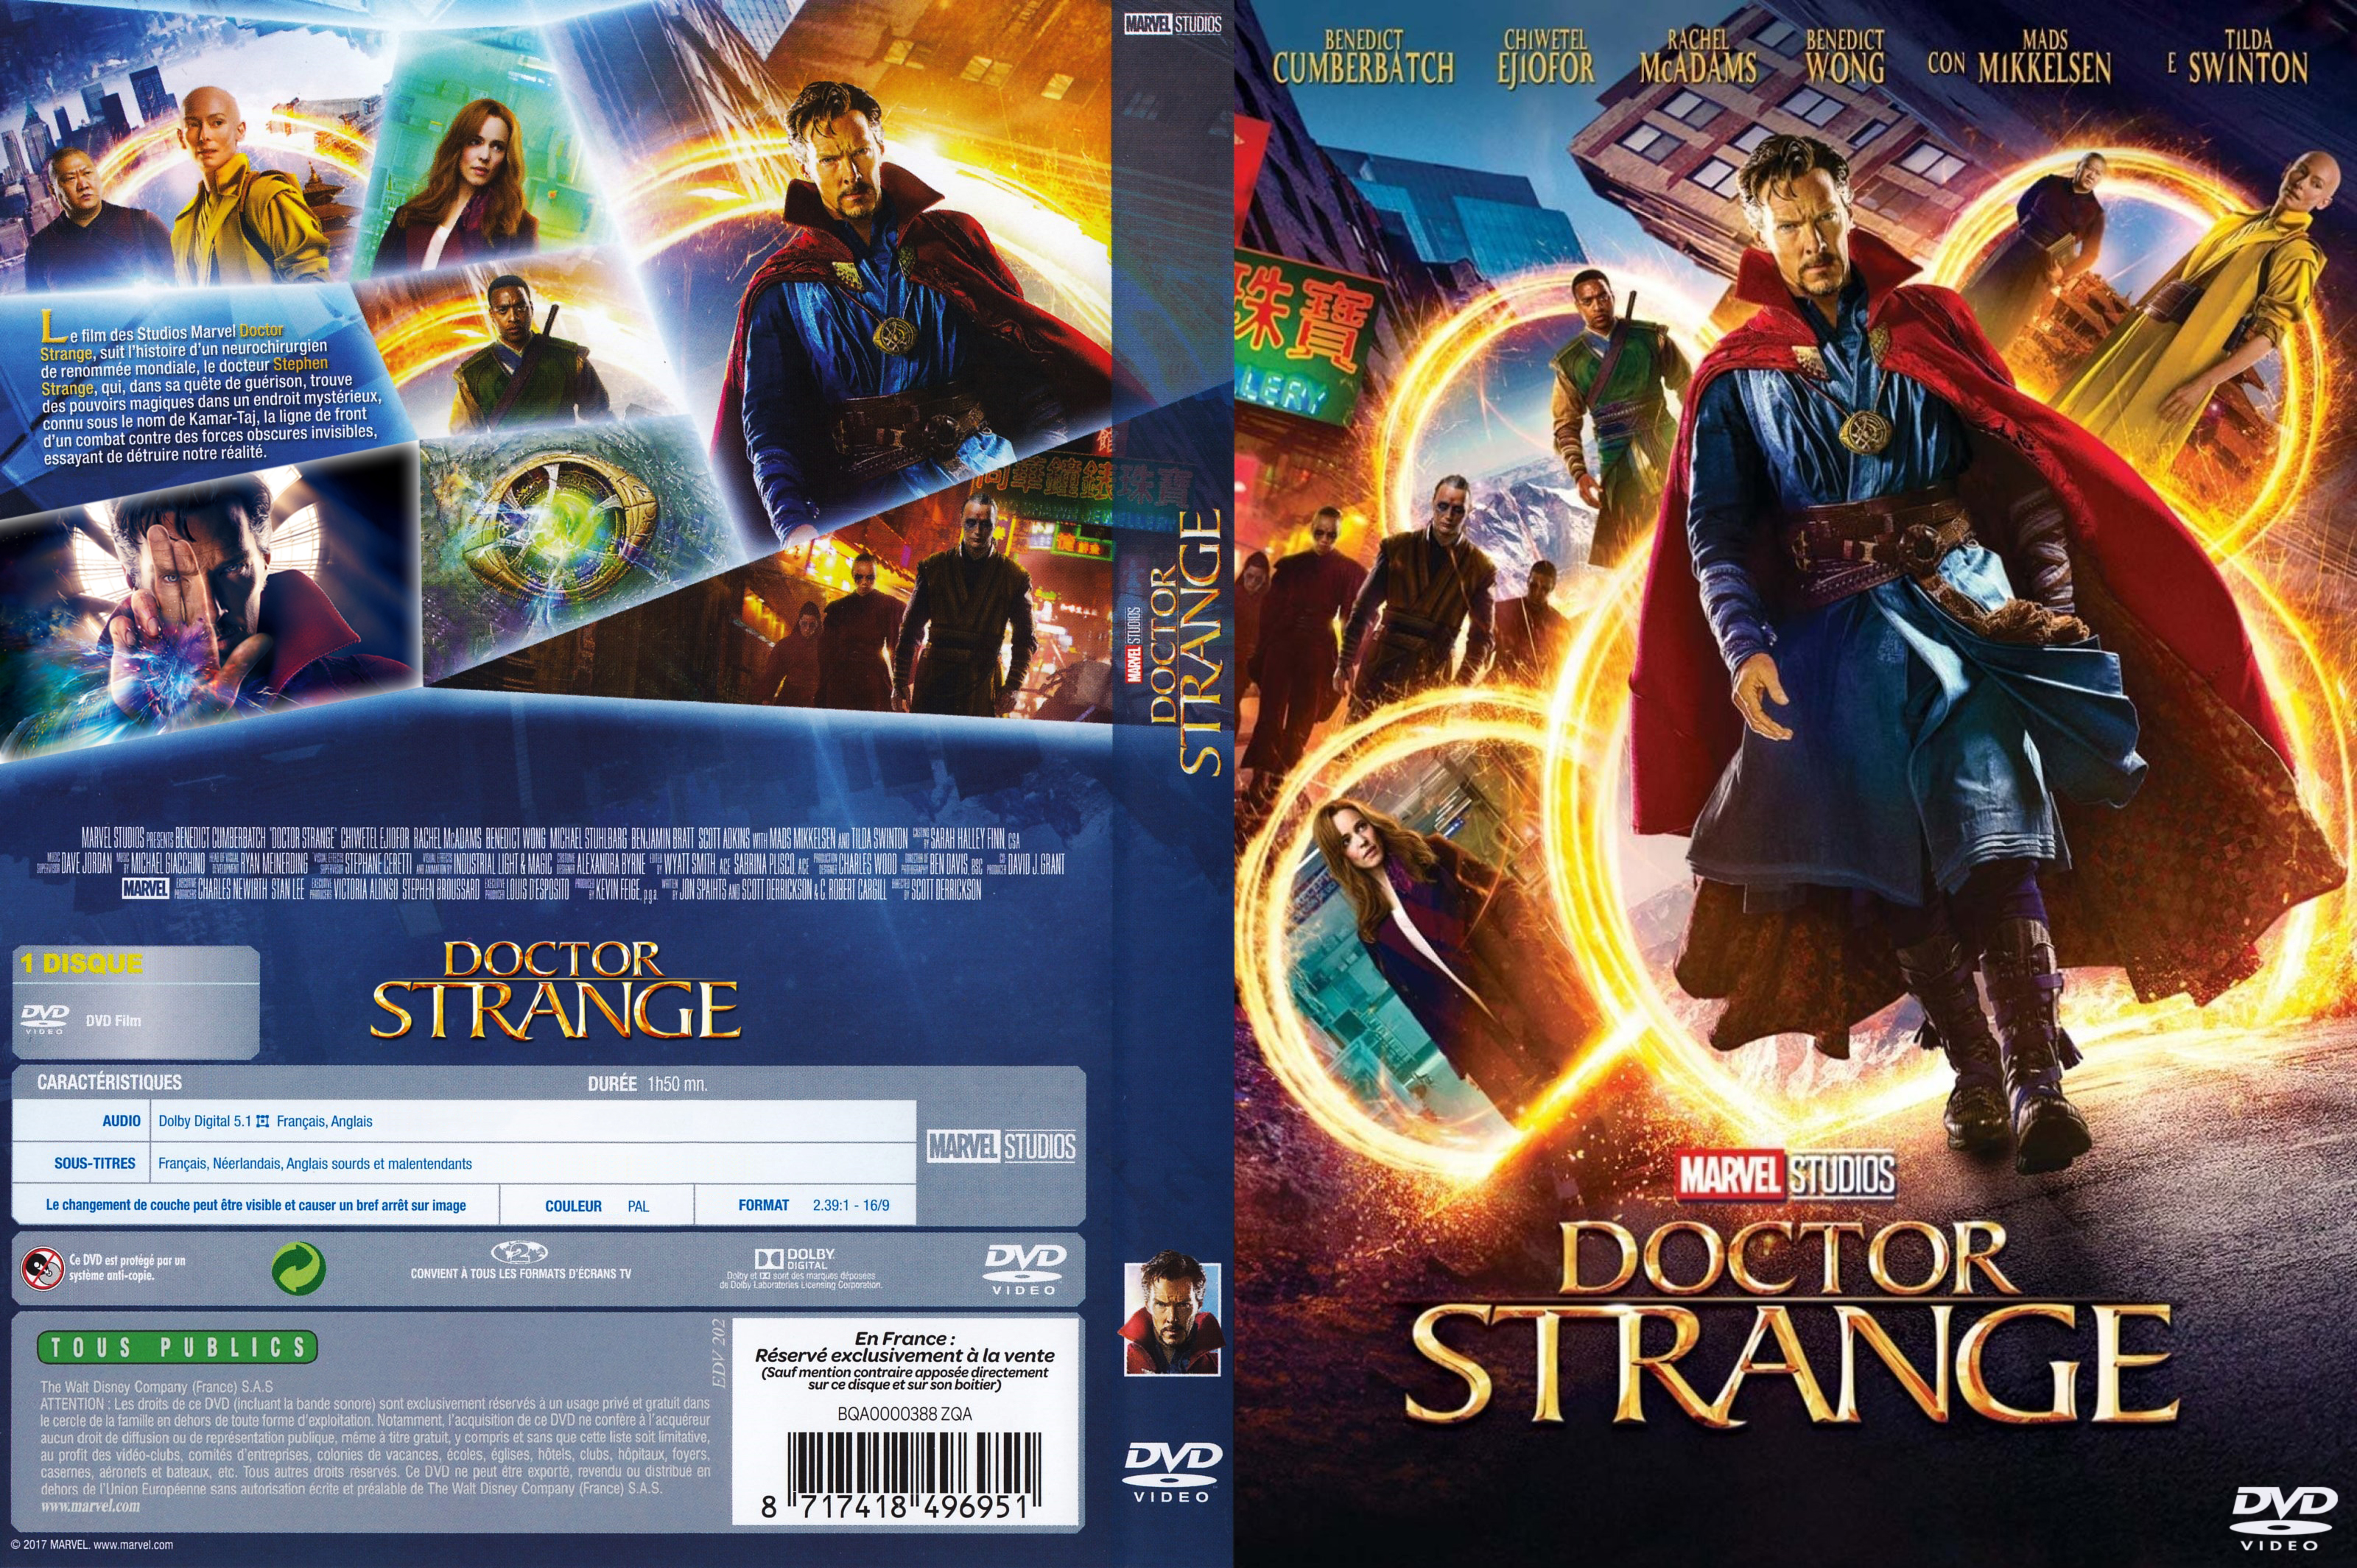 Jaquette DVD Doctor Strange custom